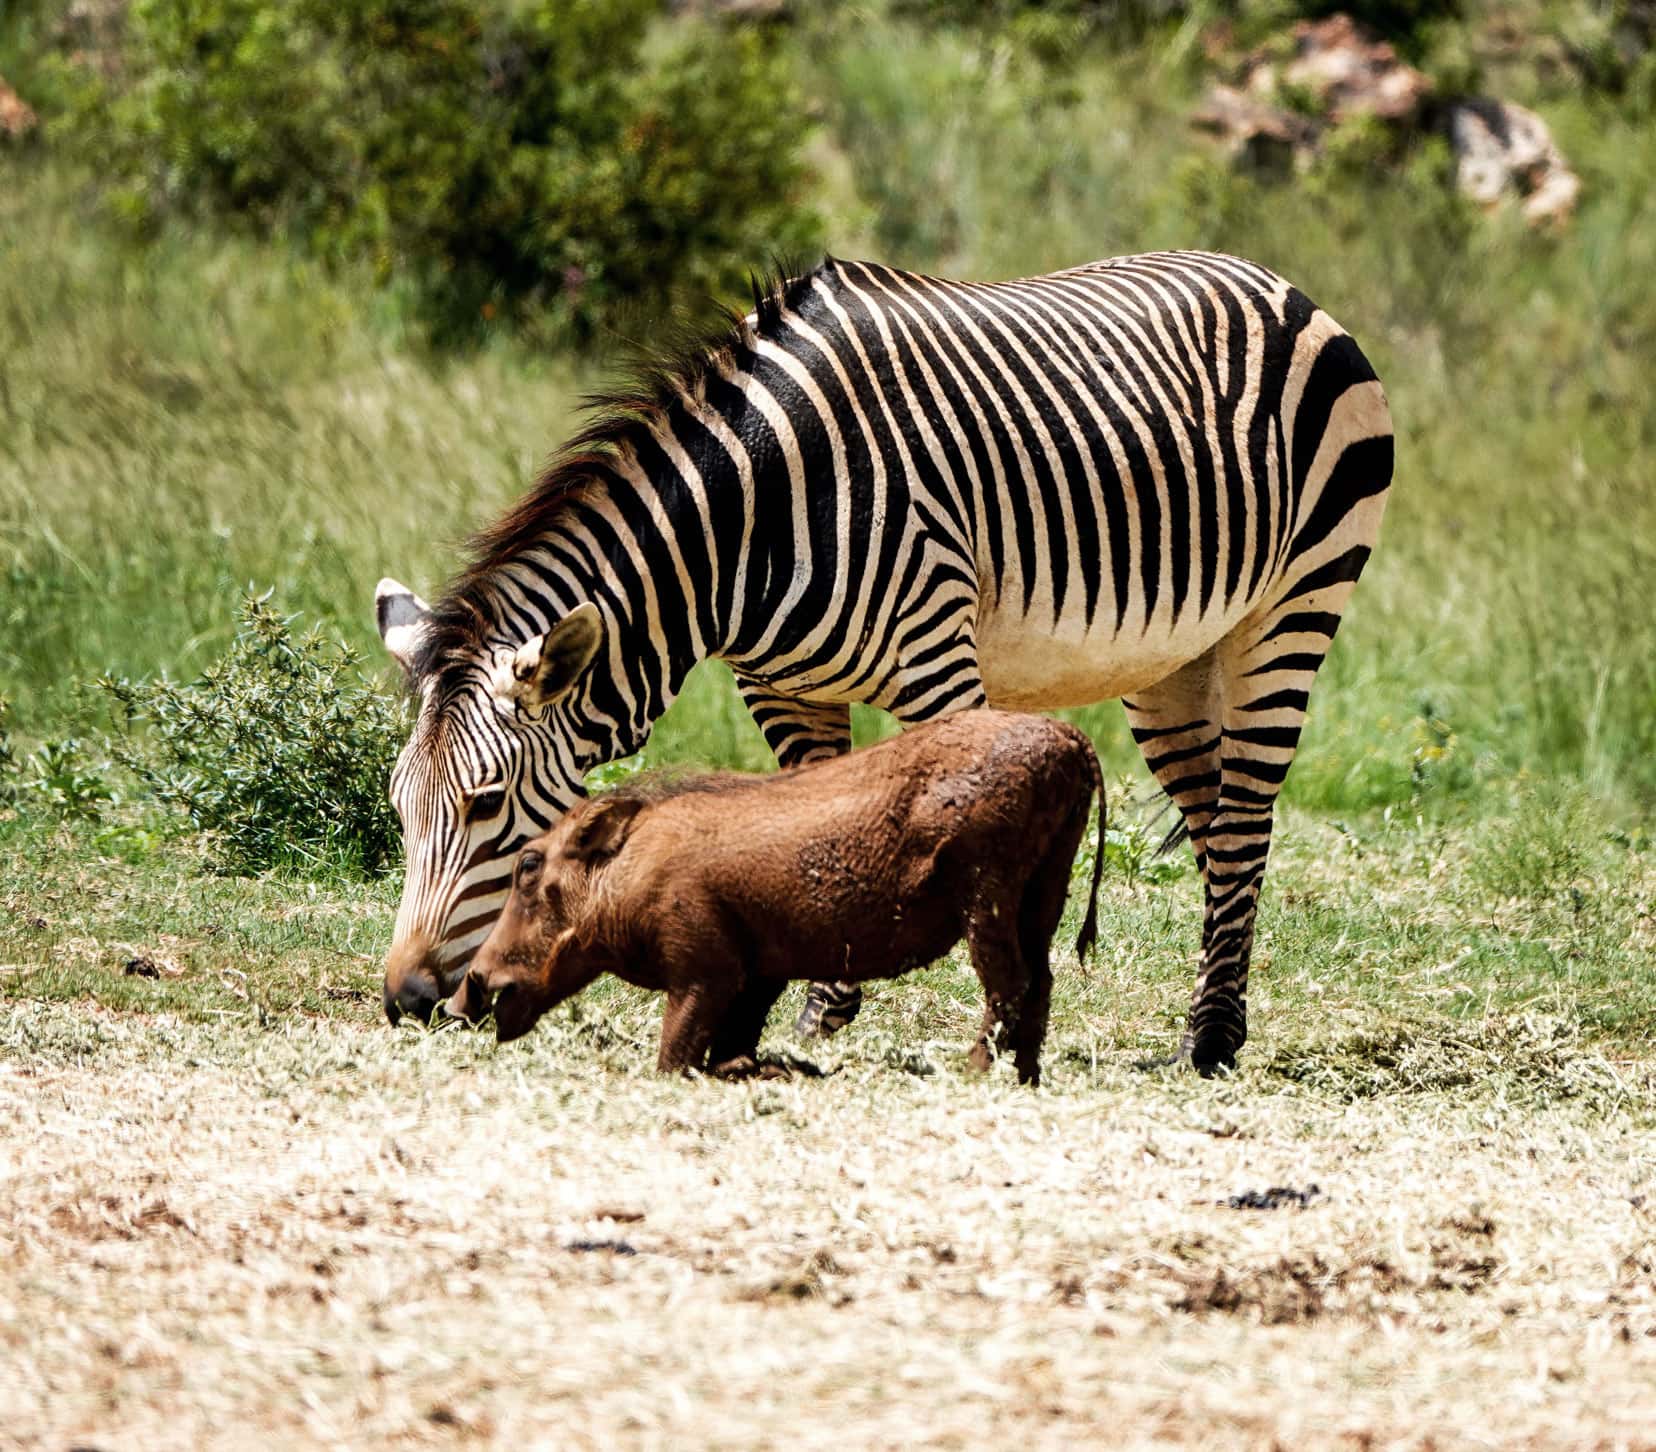 Hartmann's zebra beside a warthog, both grazing